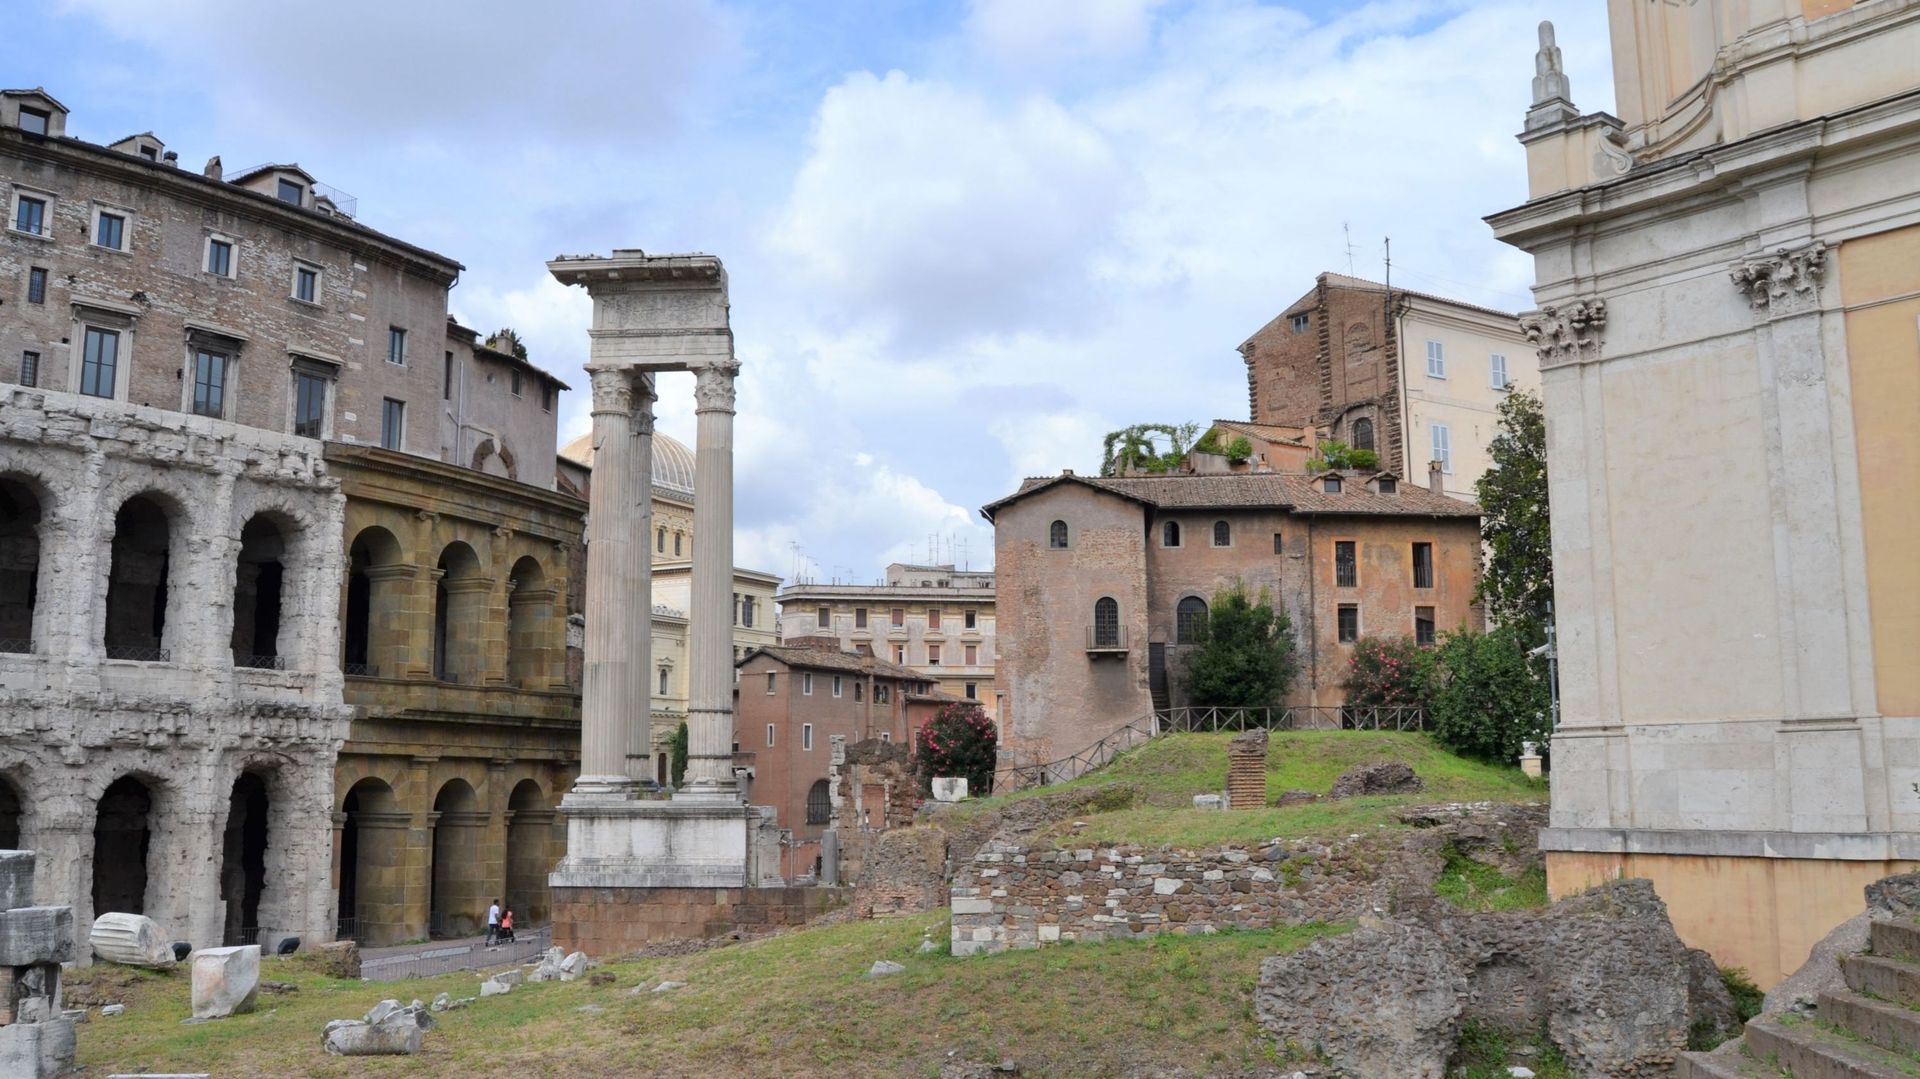 Un coin pittoresque des ruines de la Rome antique…